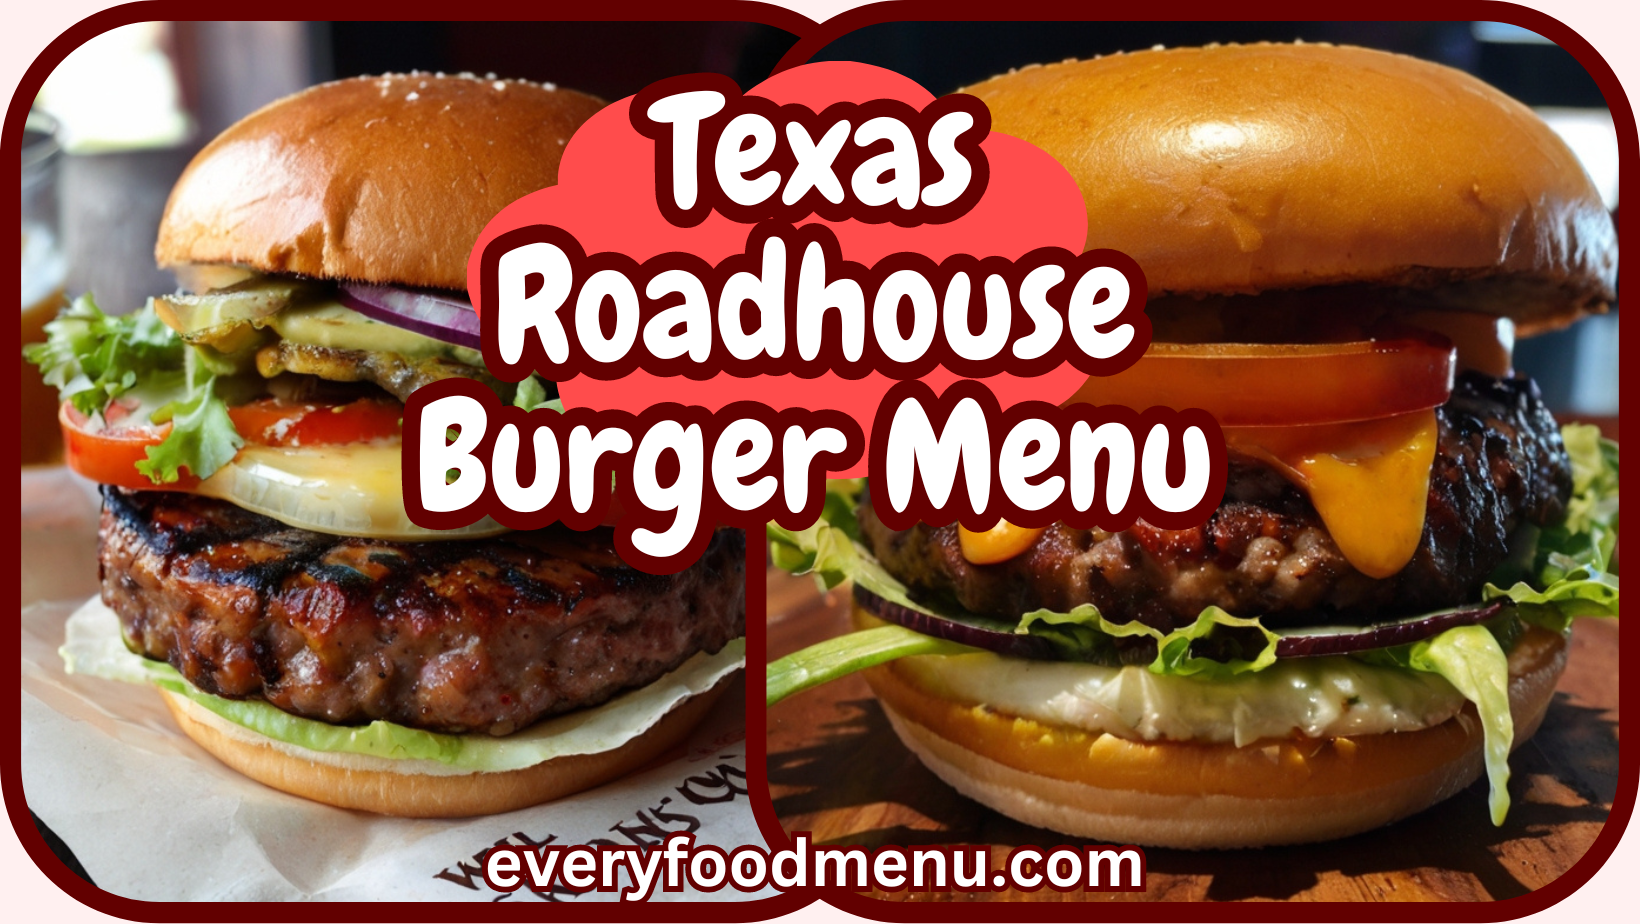 Texas Roadhouse Burger Menu